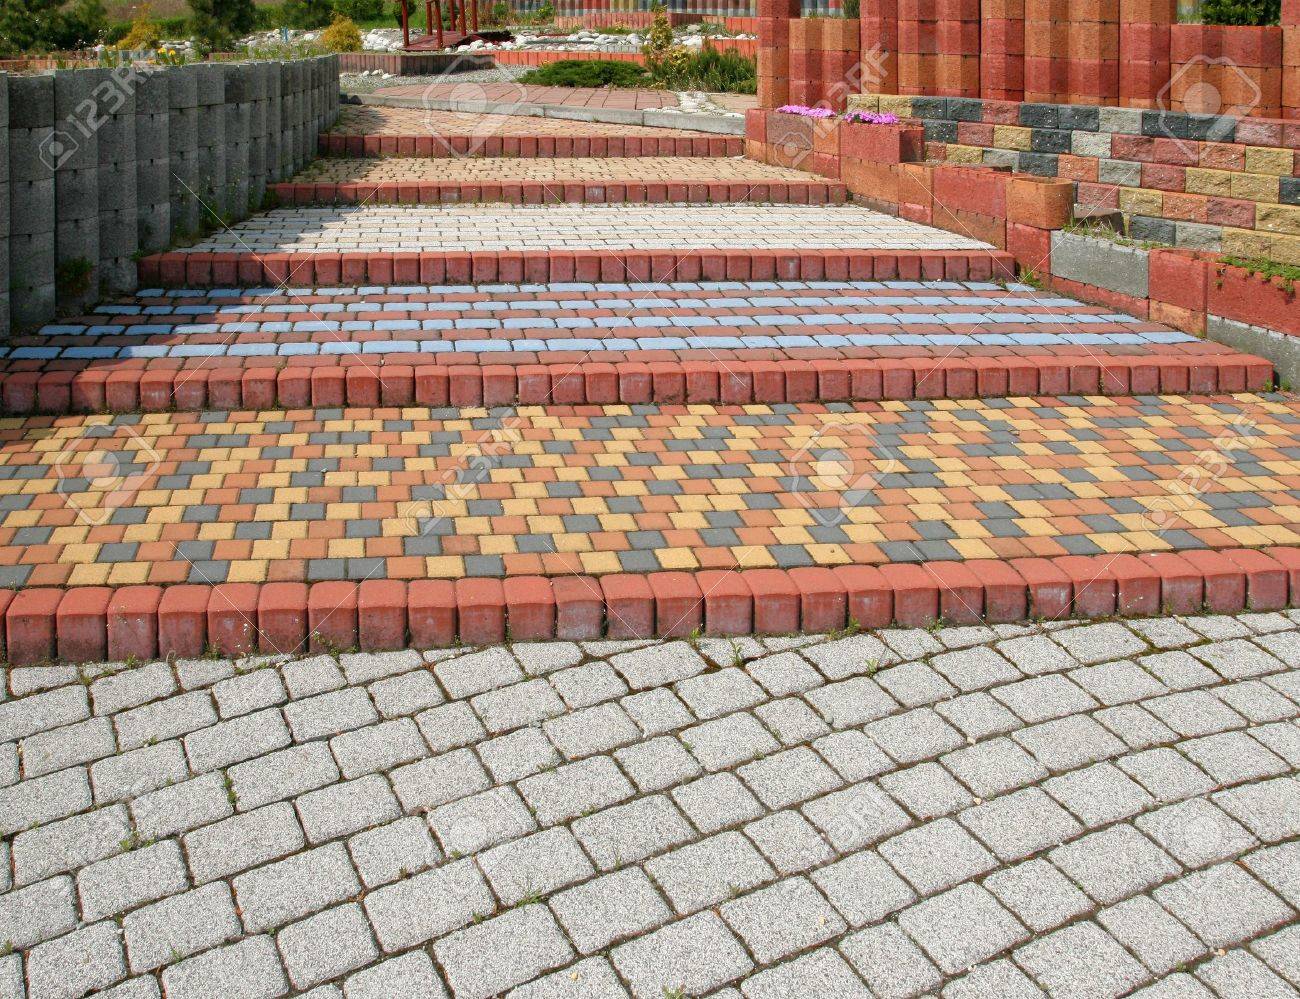 3052349-Tiled-colorful-decorative-pavement-Sett-blocks-pattern--Stock-Photo.jpg